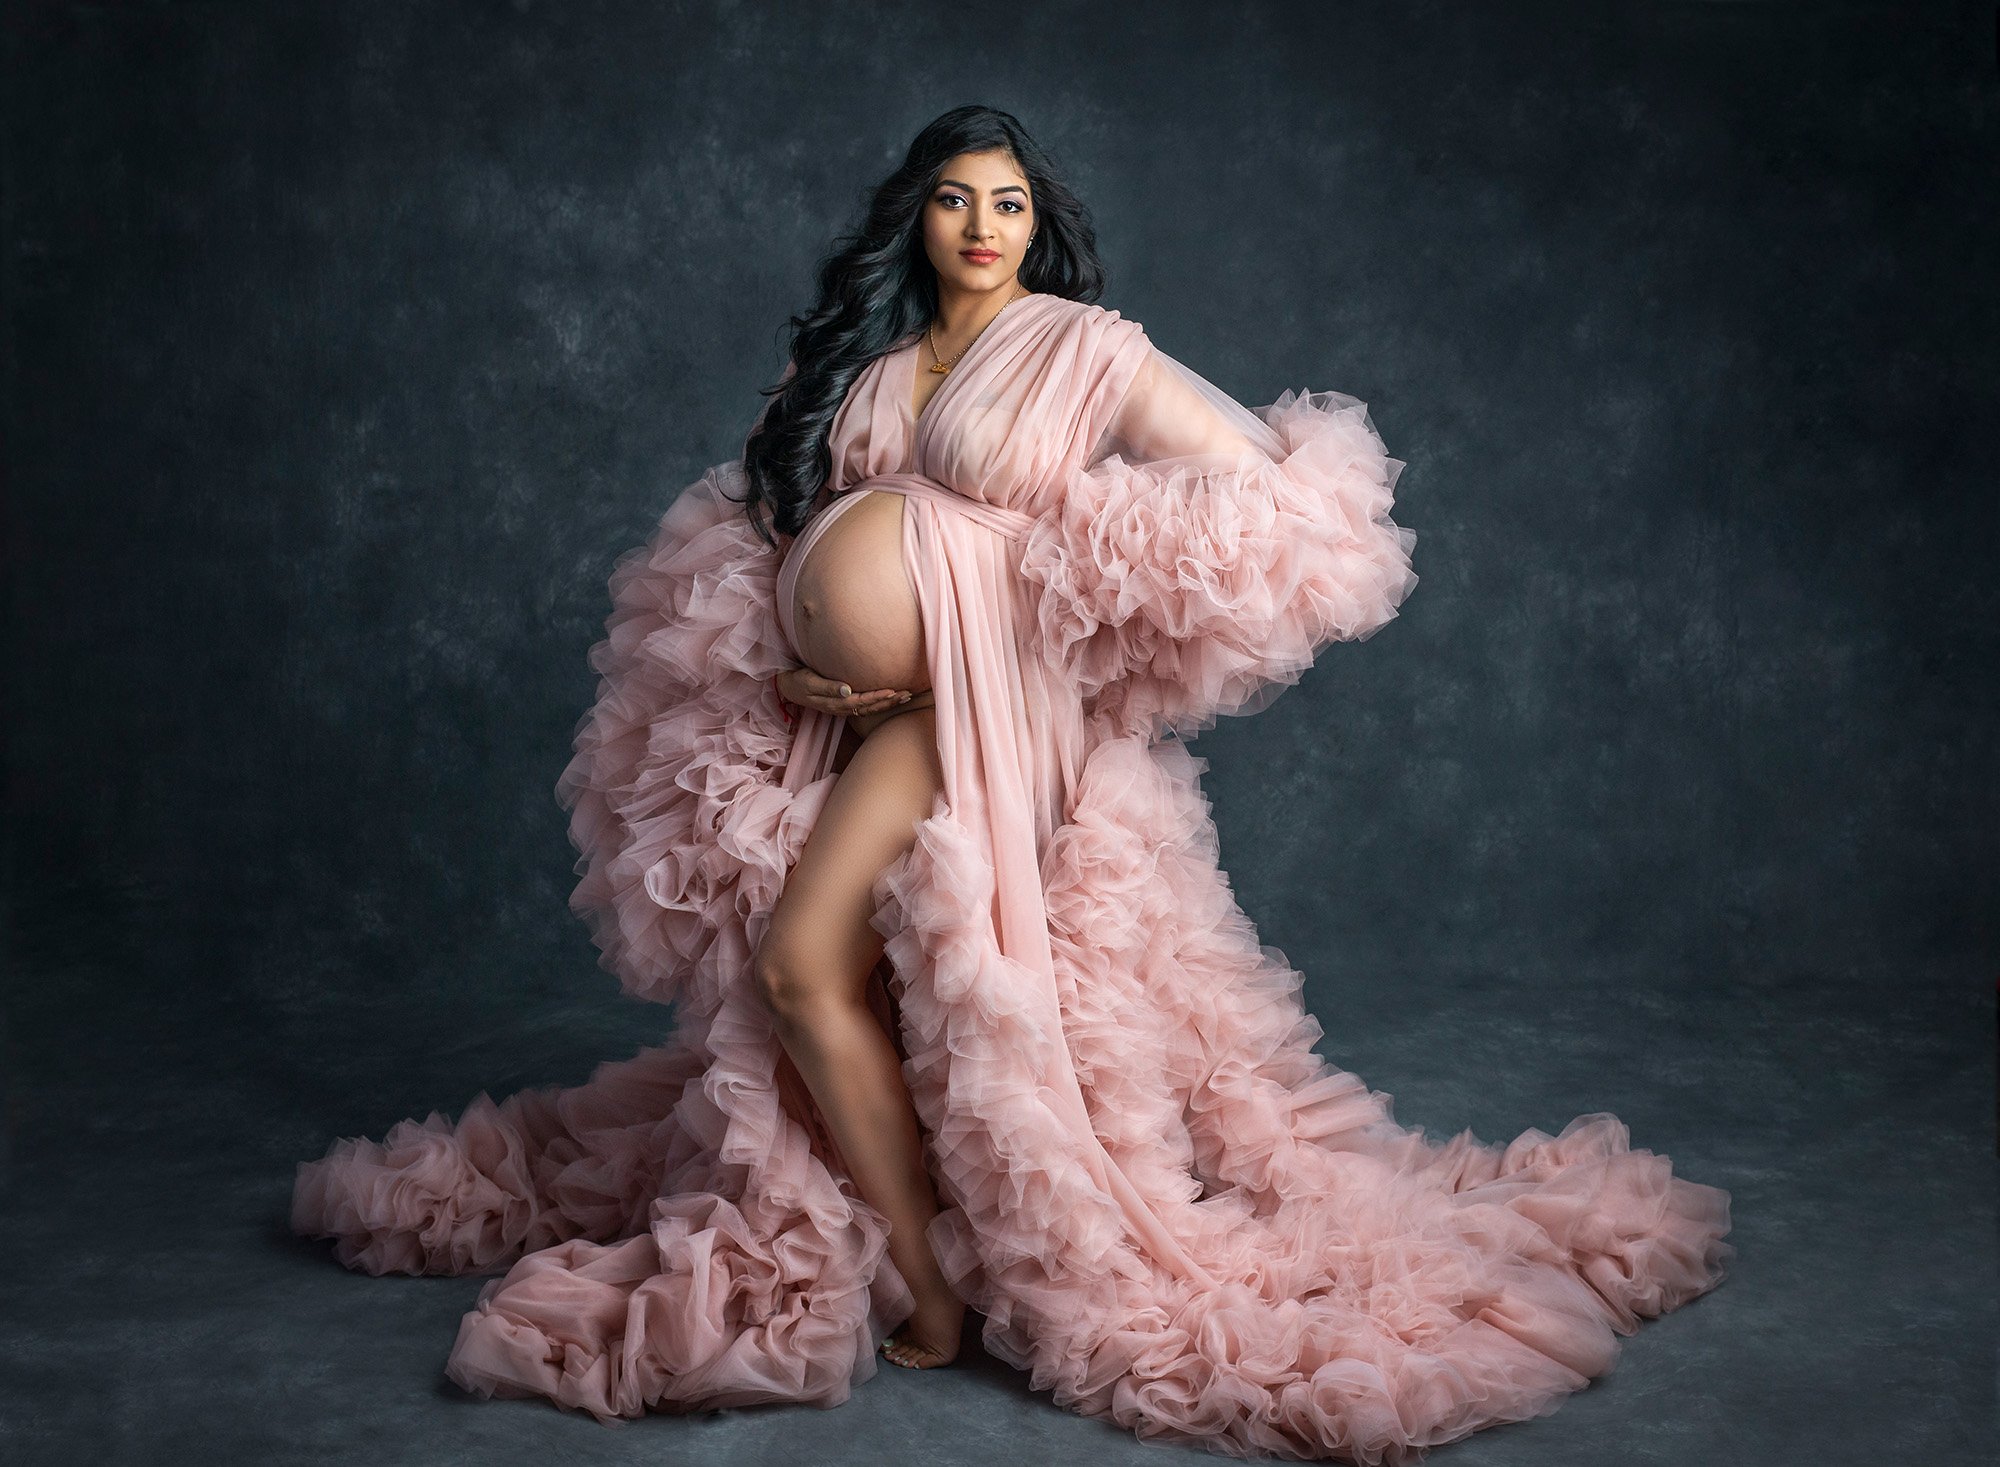 Indian Goddess Maternity photographs pregnant woman posing wearing ruffled pink dress exposing pregnant stomach